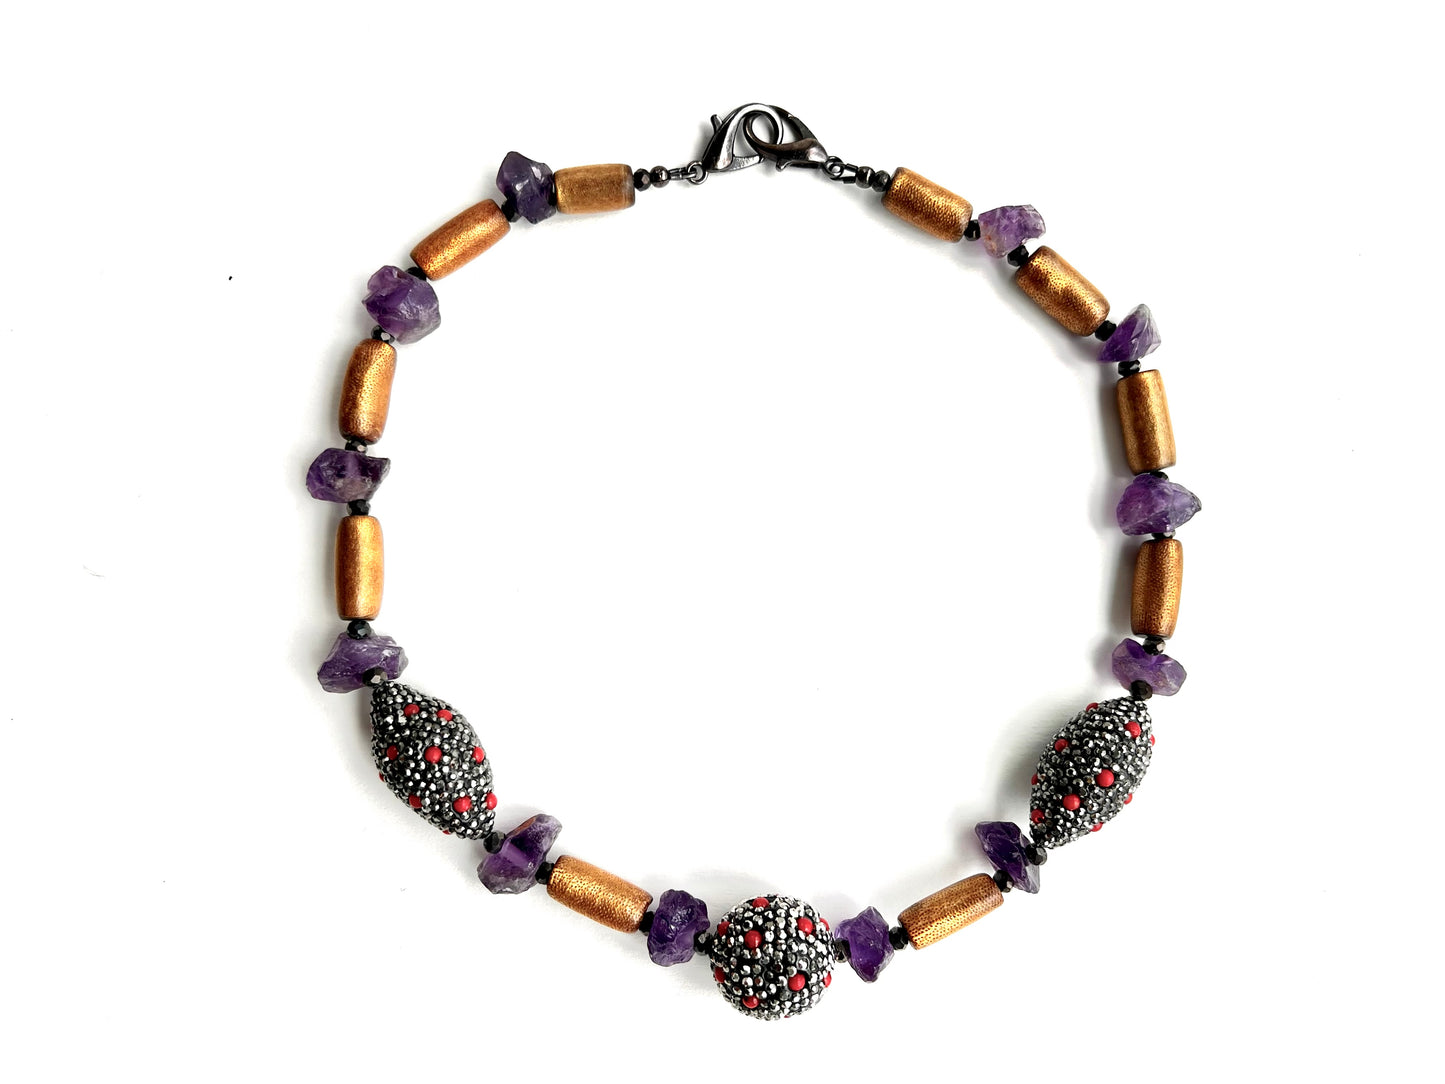 Taita Necklace. Vintage natural gold coral, handmade rhinestone beads,raw amethyst